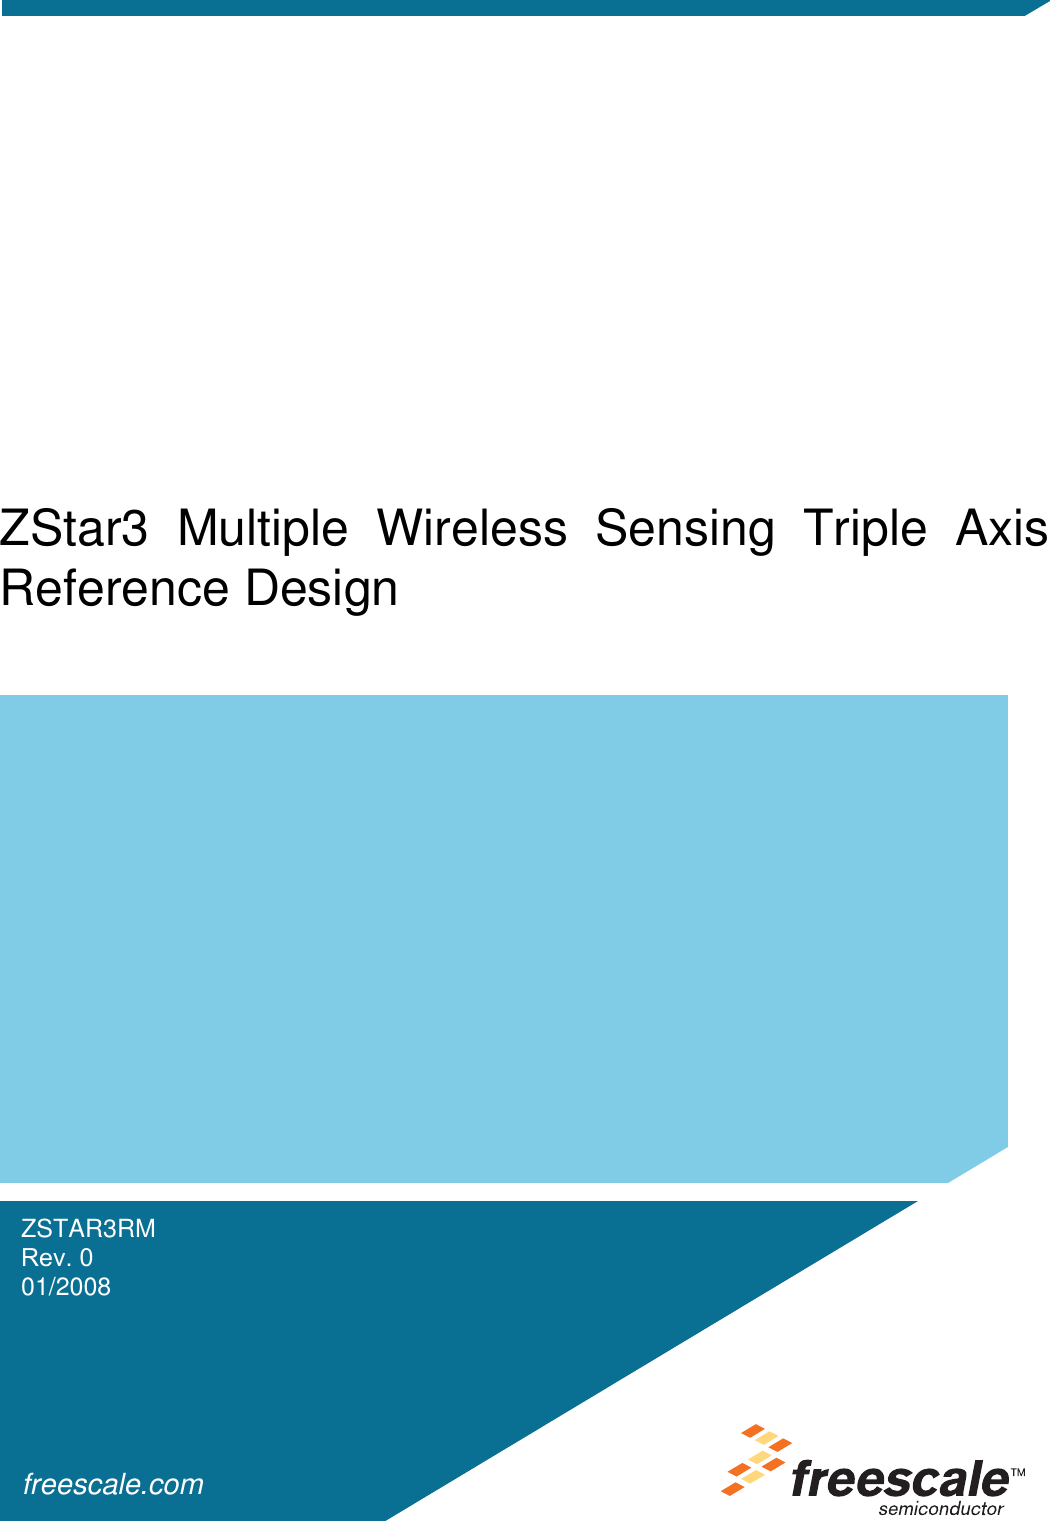 freescale.comZStar3 Multiple Wireless Sensing Triple AxisReference DesignZSTAR3RMRev. 001/2008